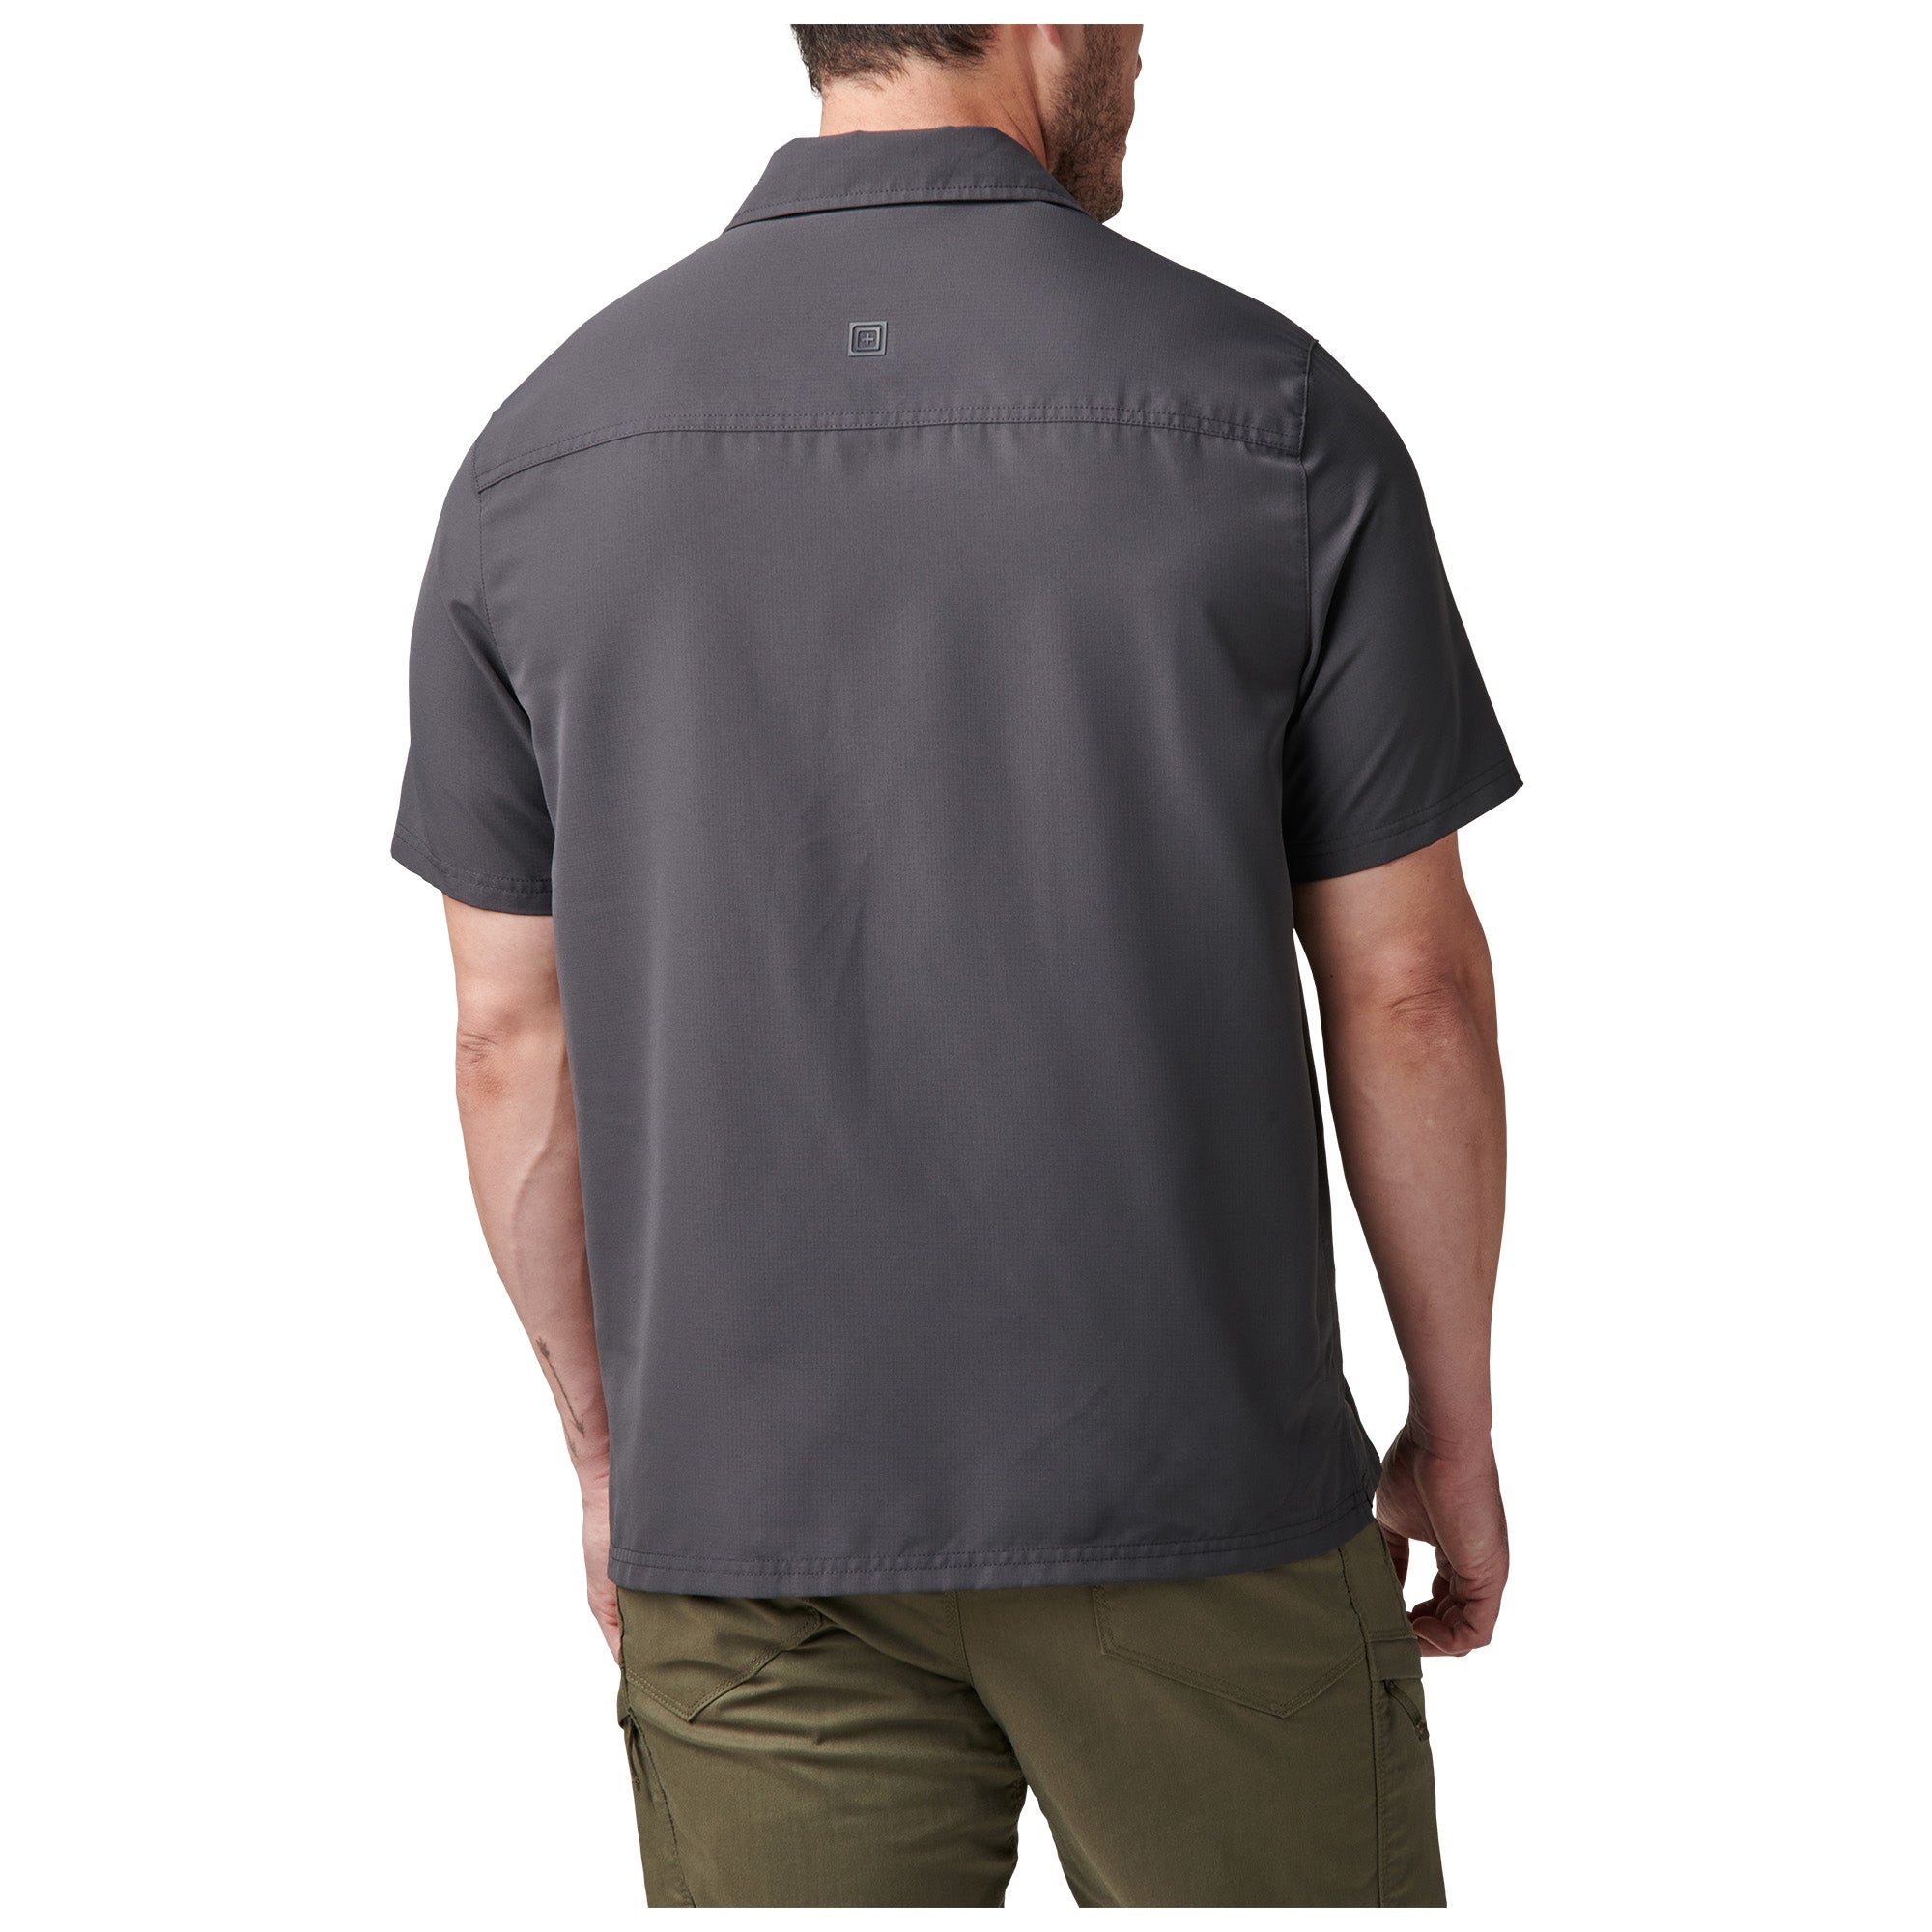 5.11 Tactical Marksman Utility Short Sleeve Shirt Tactical Gear Australia Supplier Distributor Dealer